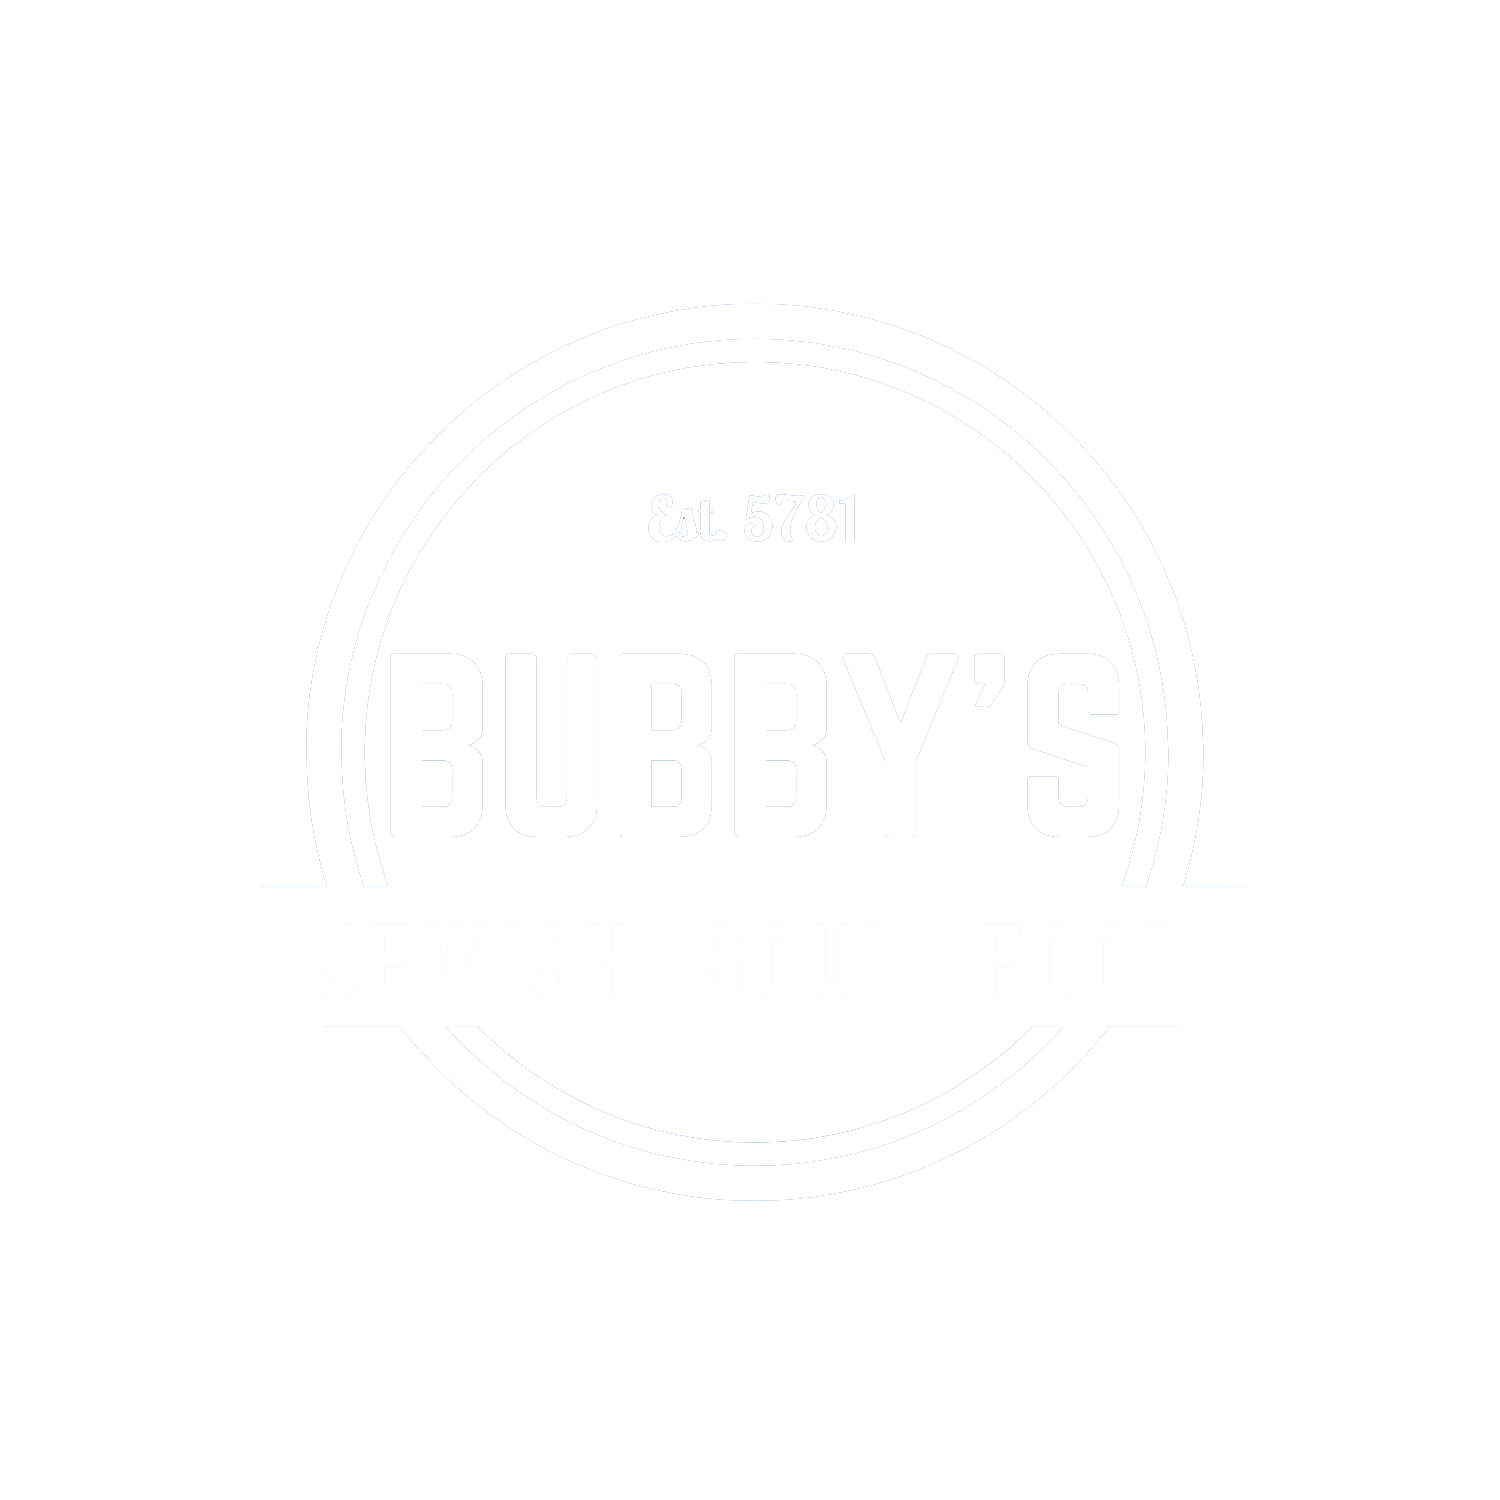 Bubbys Jewish Soul Food Home